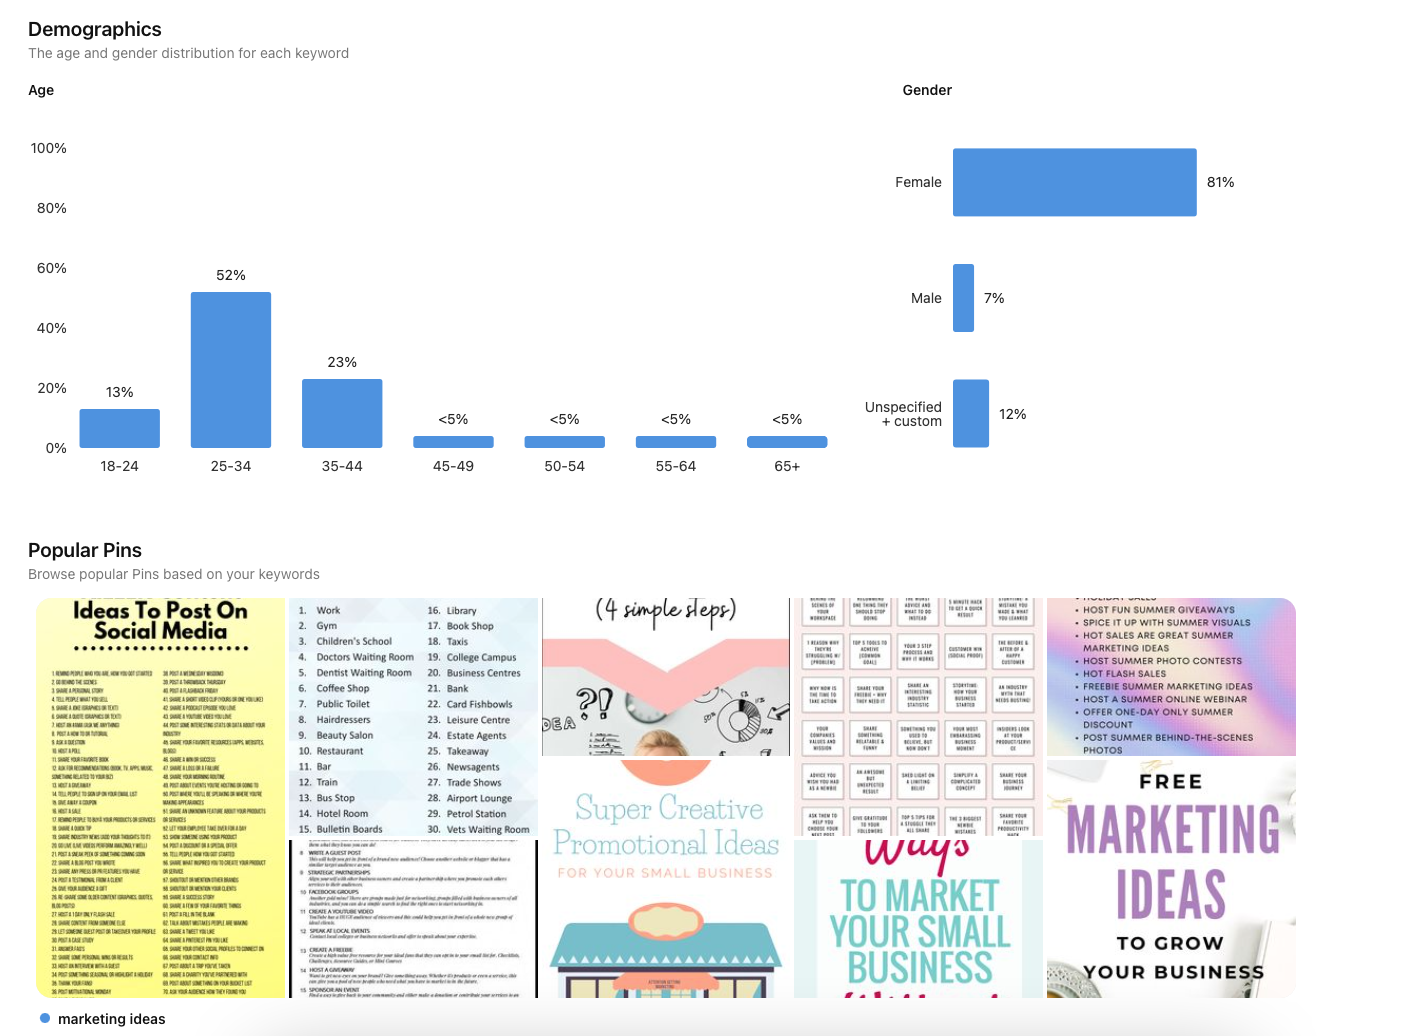 Pinterest Trends Tool shown by Jen Vazquez Media Screen Shot 2022-11-13 at 9.42.35 AM